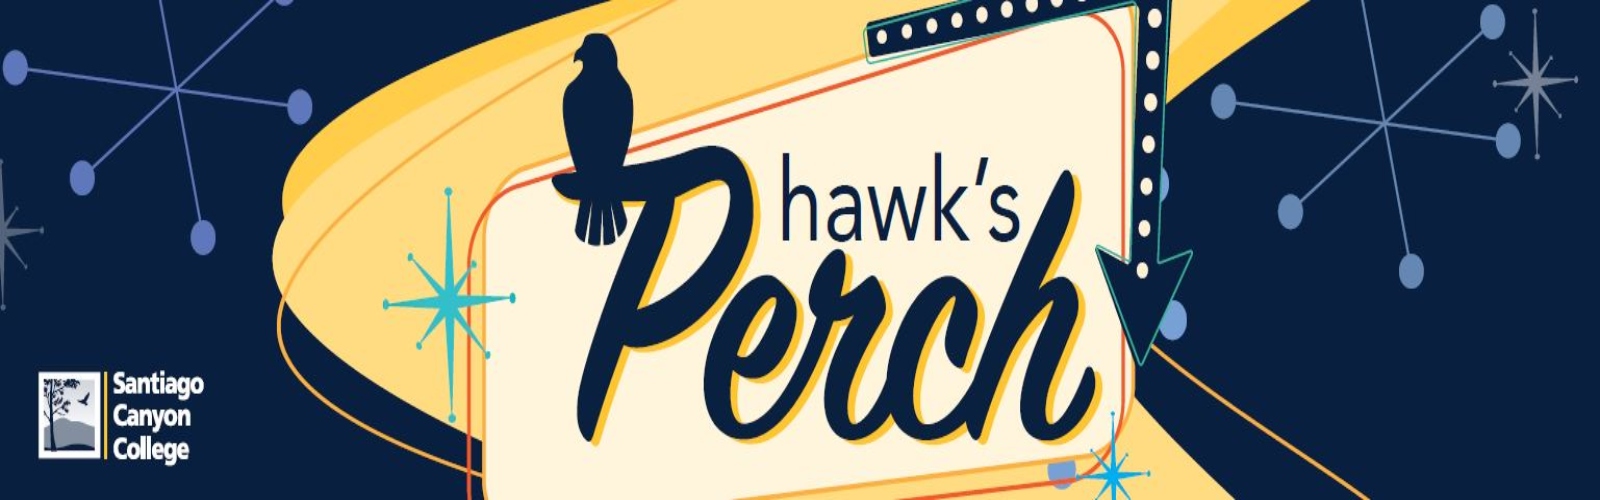 Hawk's Perch